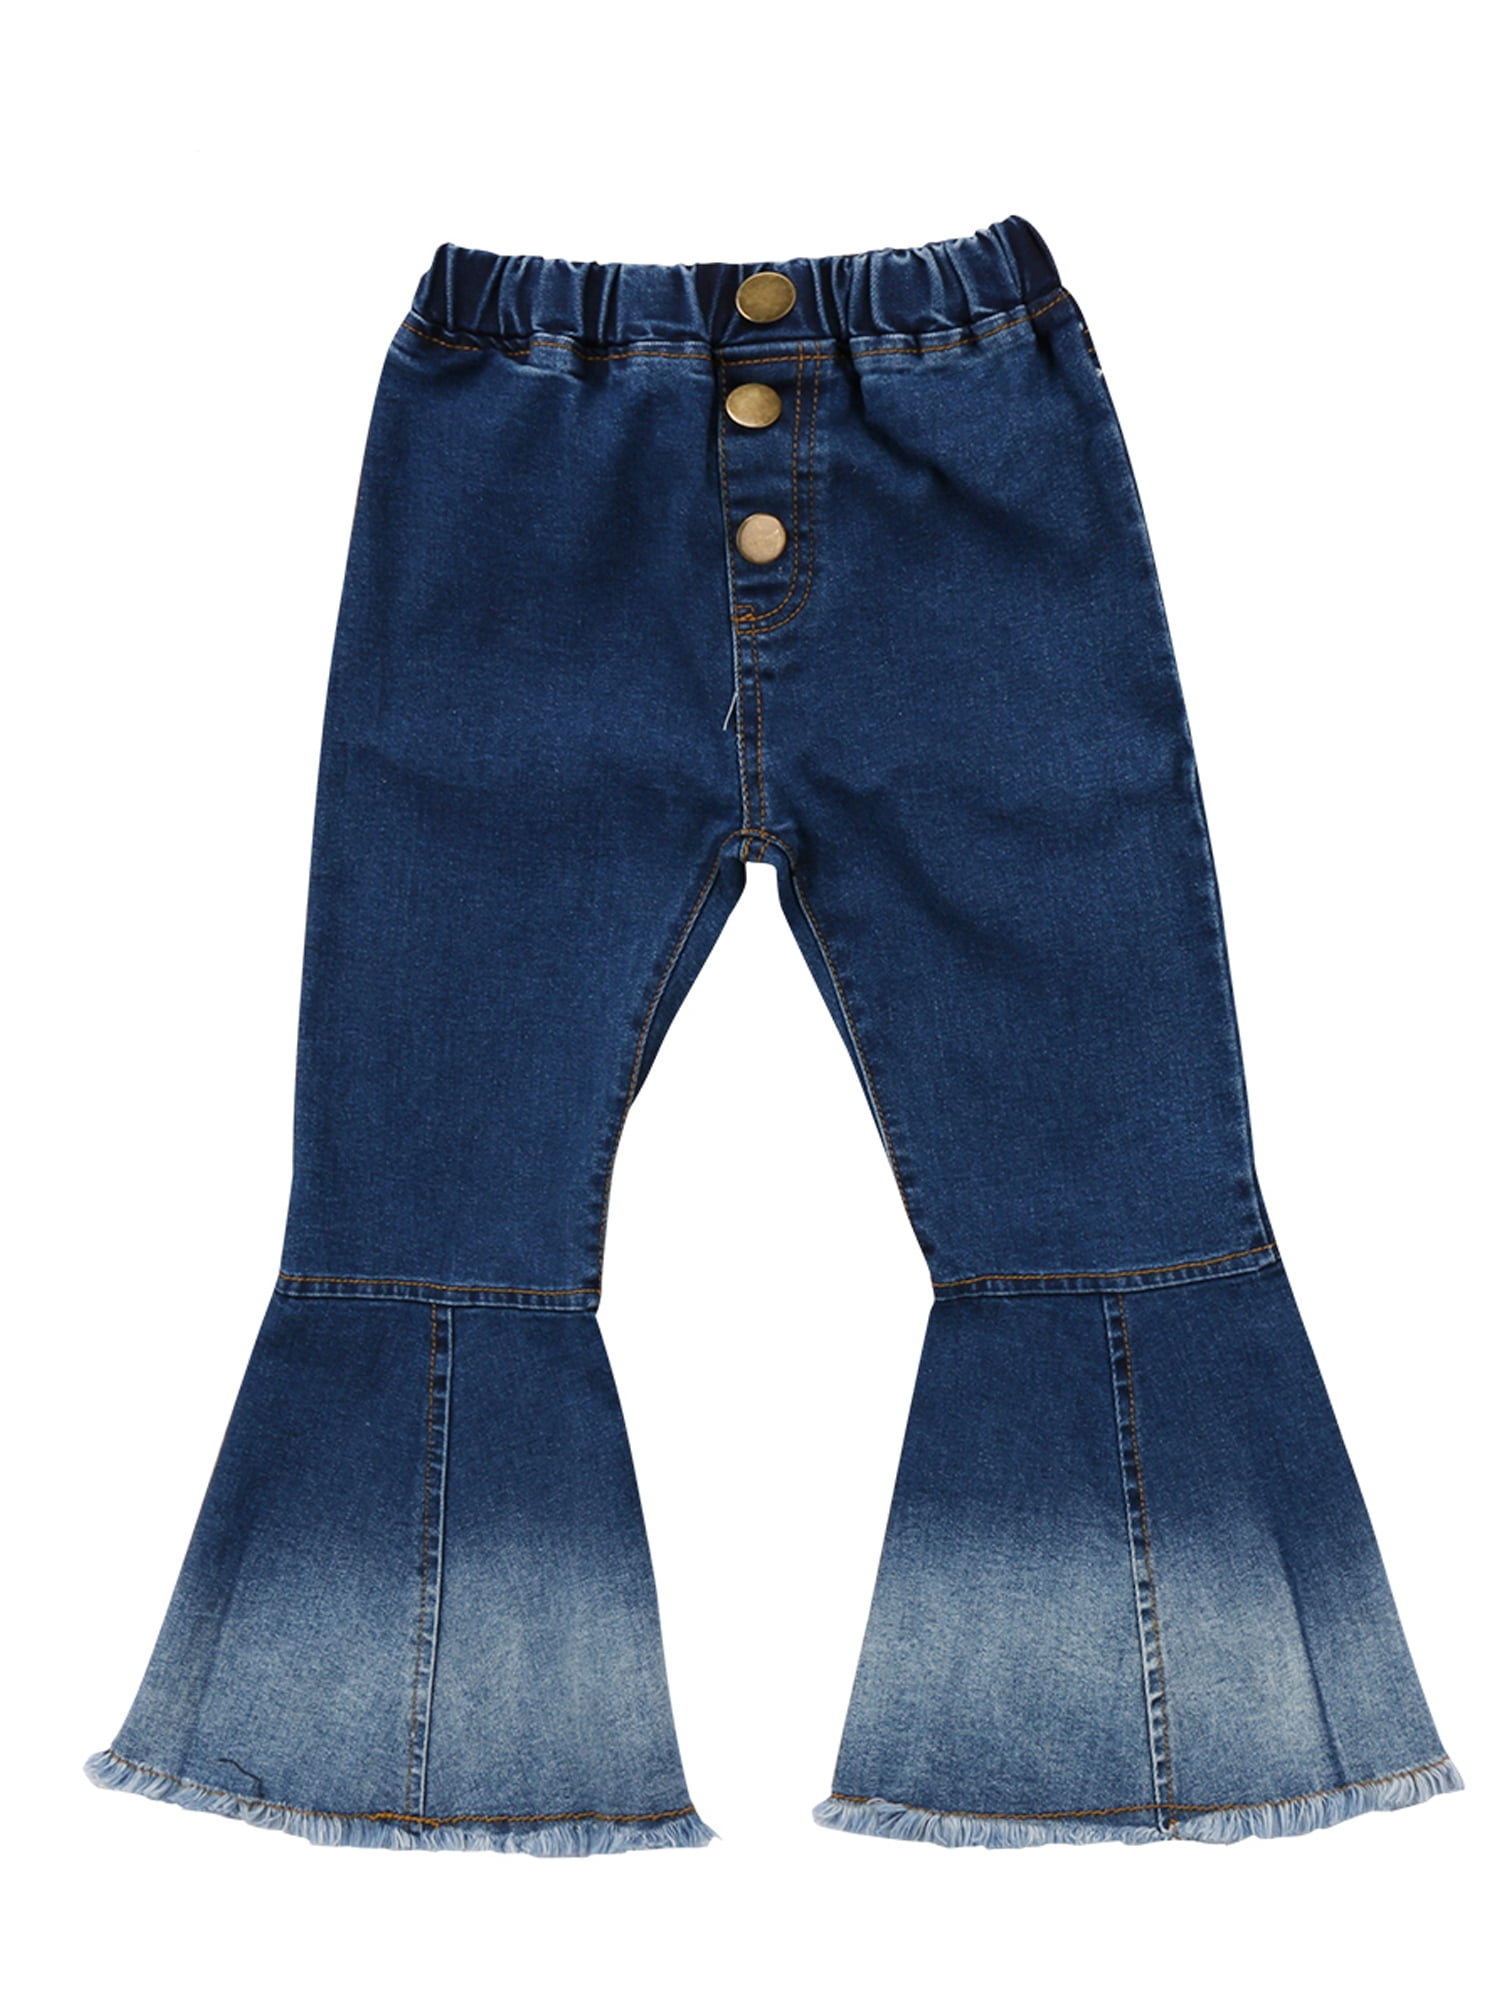 1 Kids Girls Jeggings Leggings Casual Stretchy Denim Pants Jeans Floral  Print